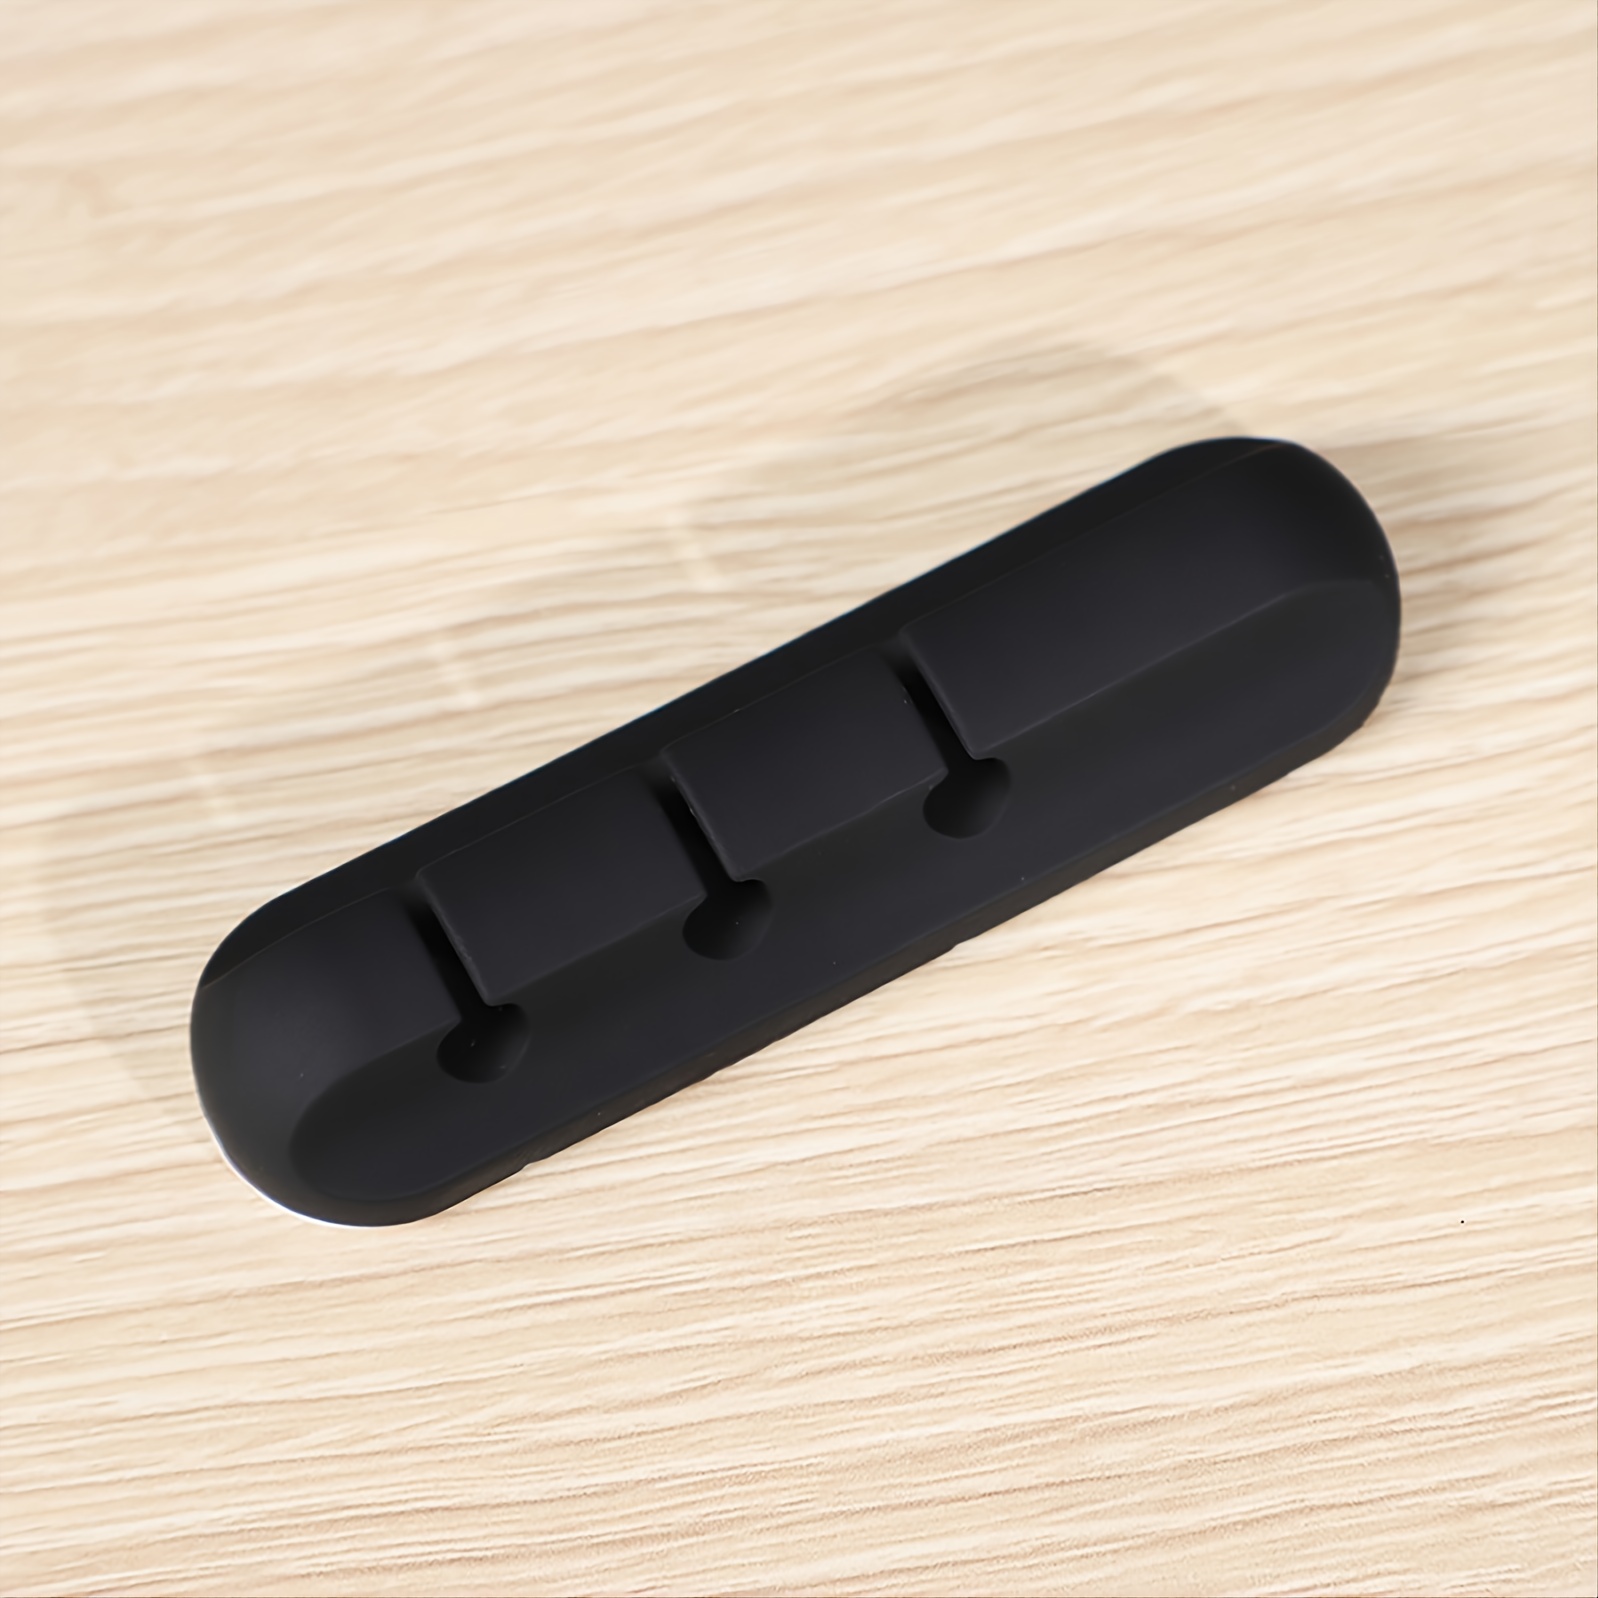 Cord Desk Holder Winder Desktop Tidy Management Silicone Cable Organizer  Clips Holder for Mouse Keyboard Earphone Headset